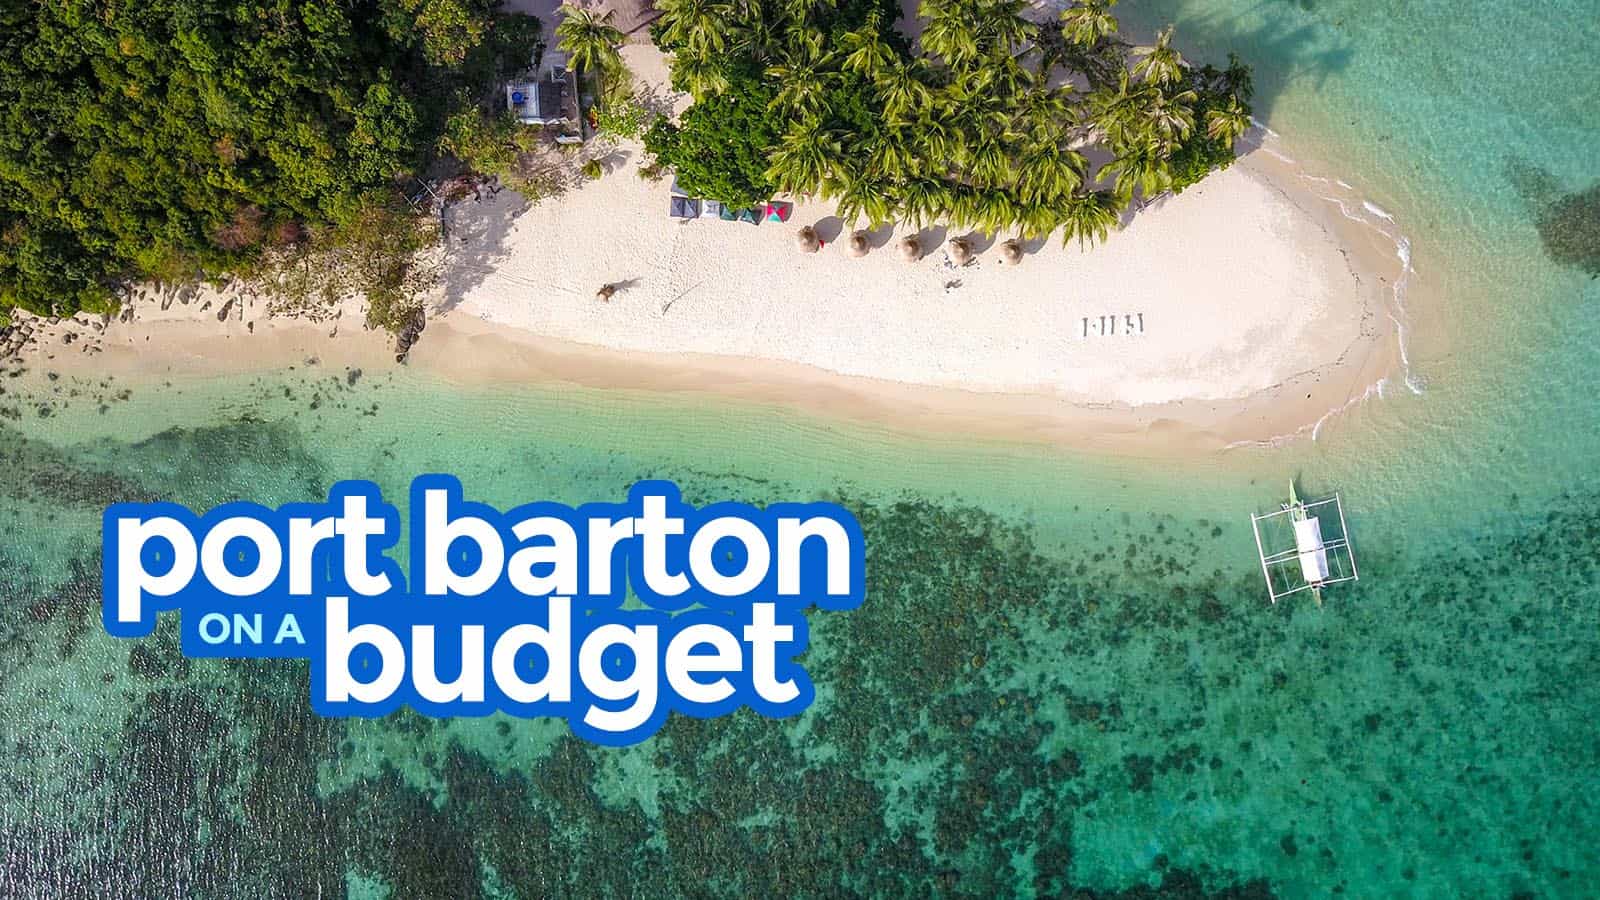 PORT BARTON: Travel Guide & Budget Itinerary